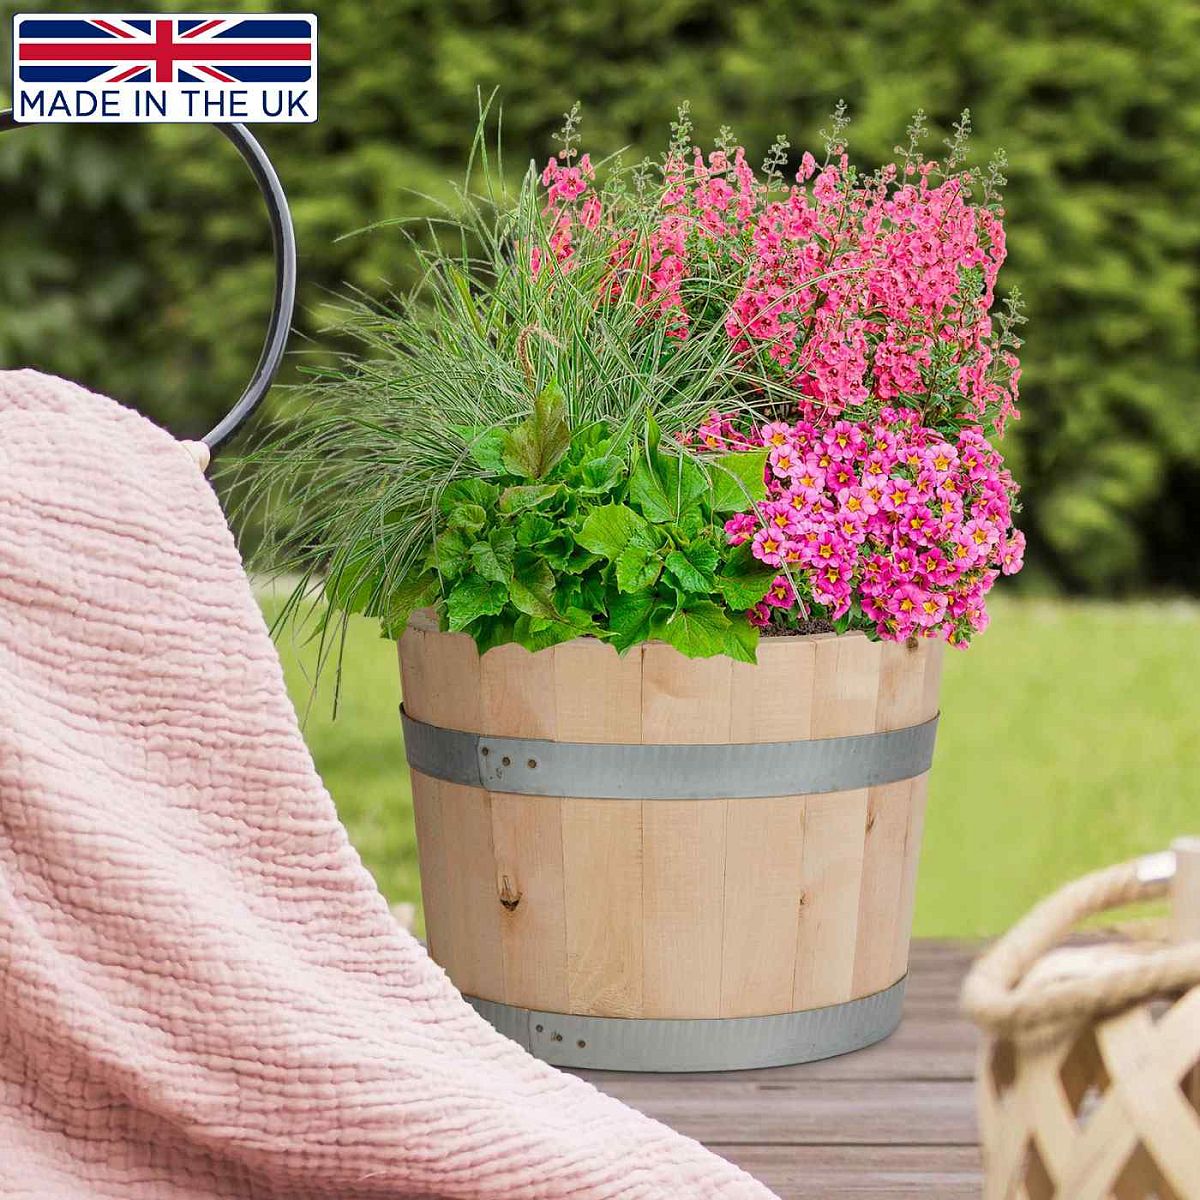 HORTICO Barrel Wood Planter for Garden, Outdoor Plant Pot made of European Birch, D40 H30 cm, 37.7L